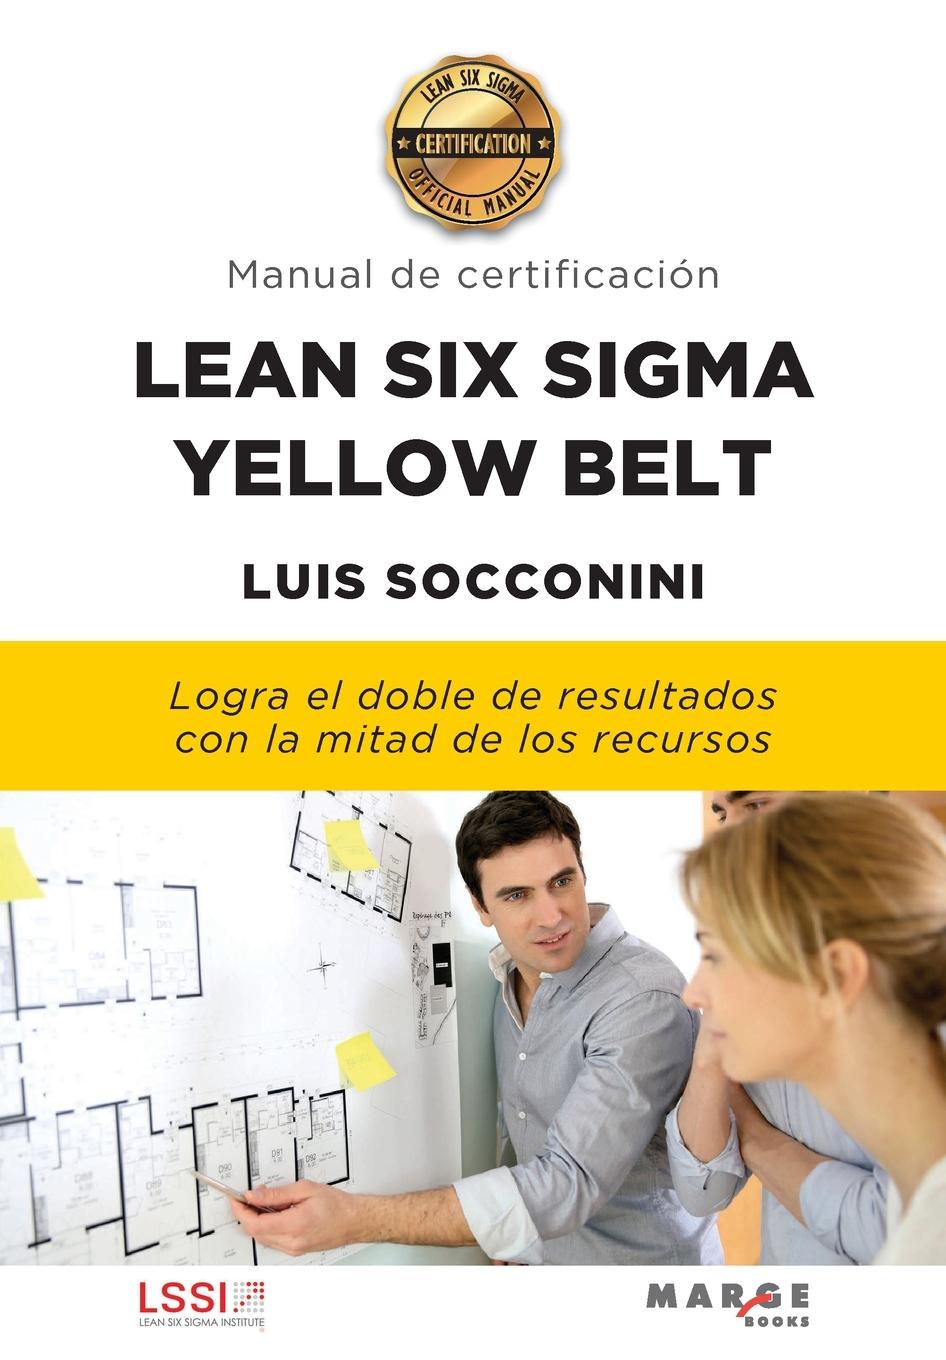 Book Lean Six Sigma Yellow Belt. Manual de certificacion 